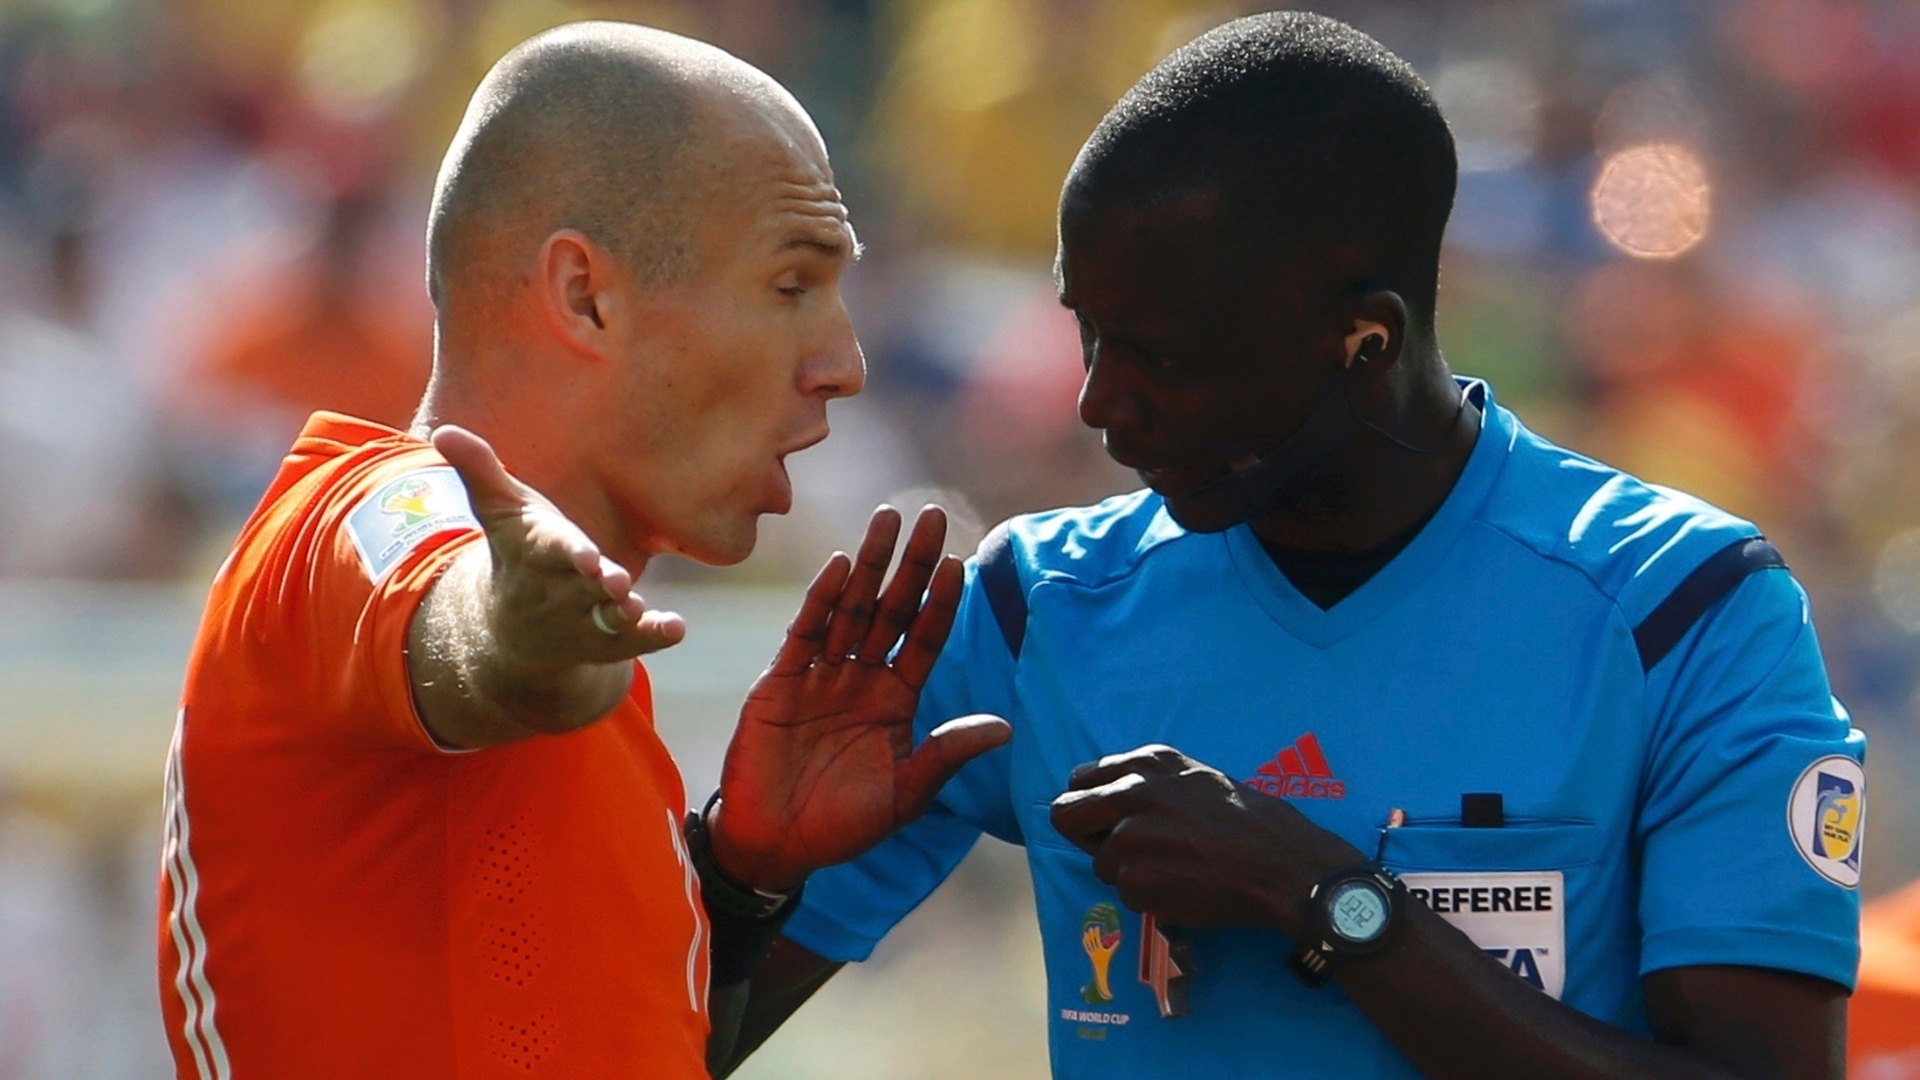 Arjen Robben reclama com o juiz durante partida entre Holanda e Chile